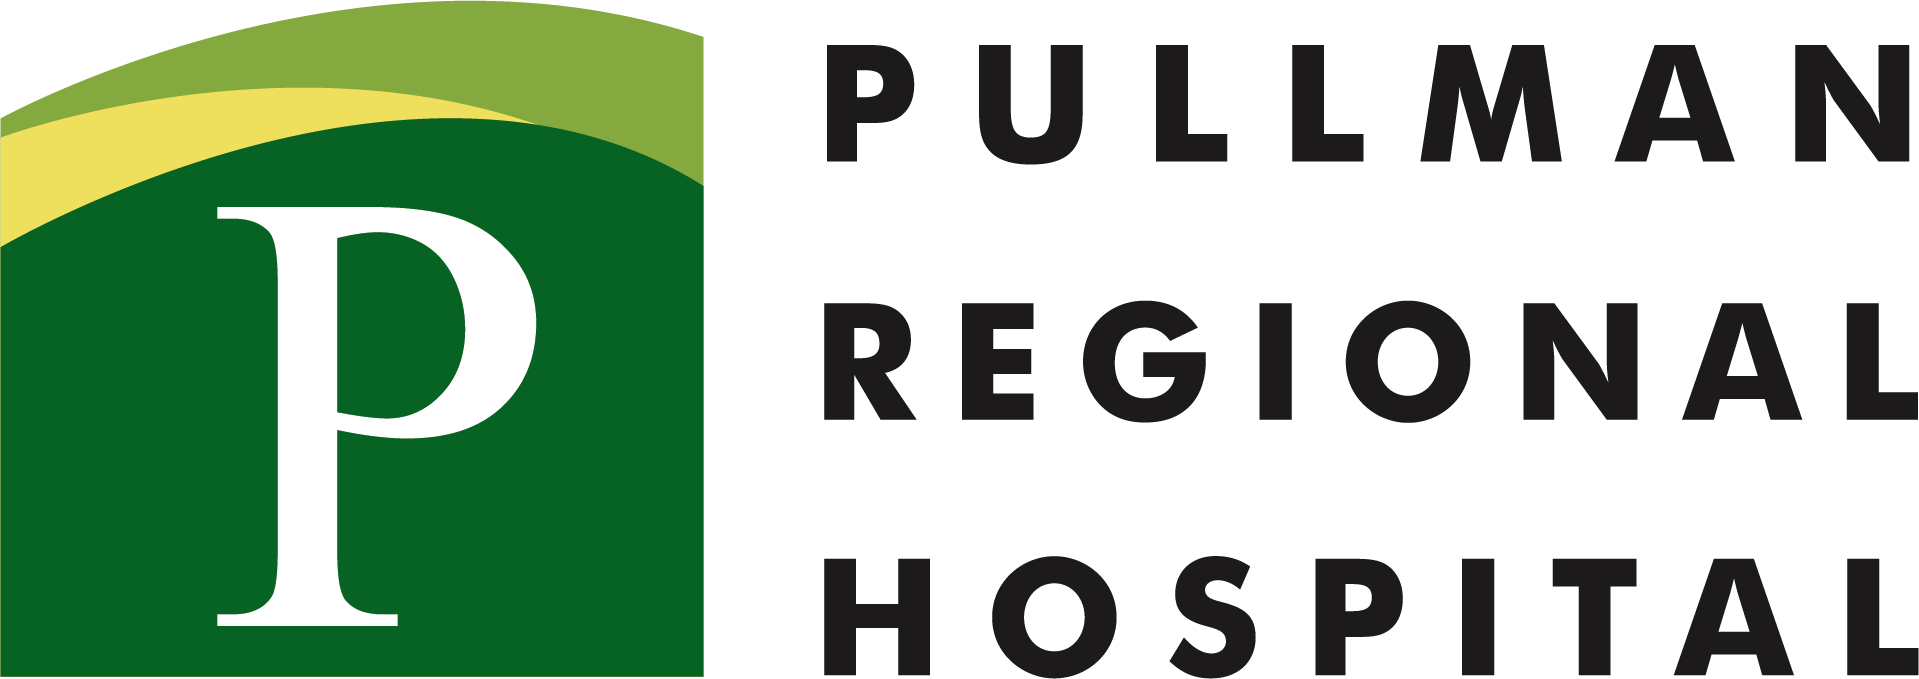 Pullman Regional Hospital_300dpi